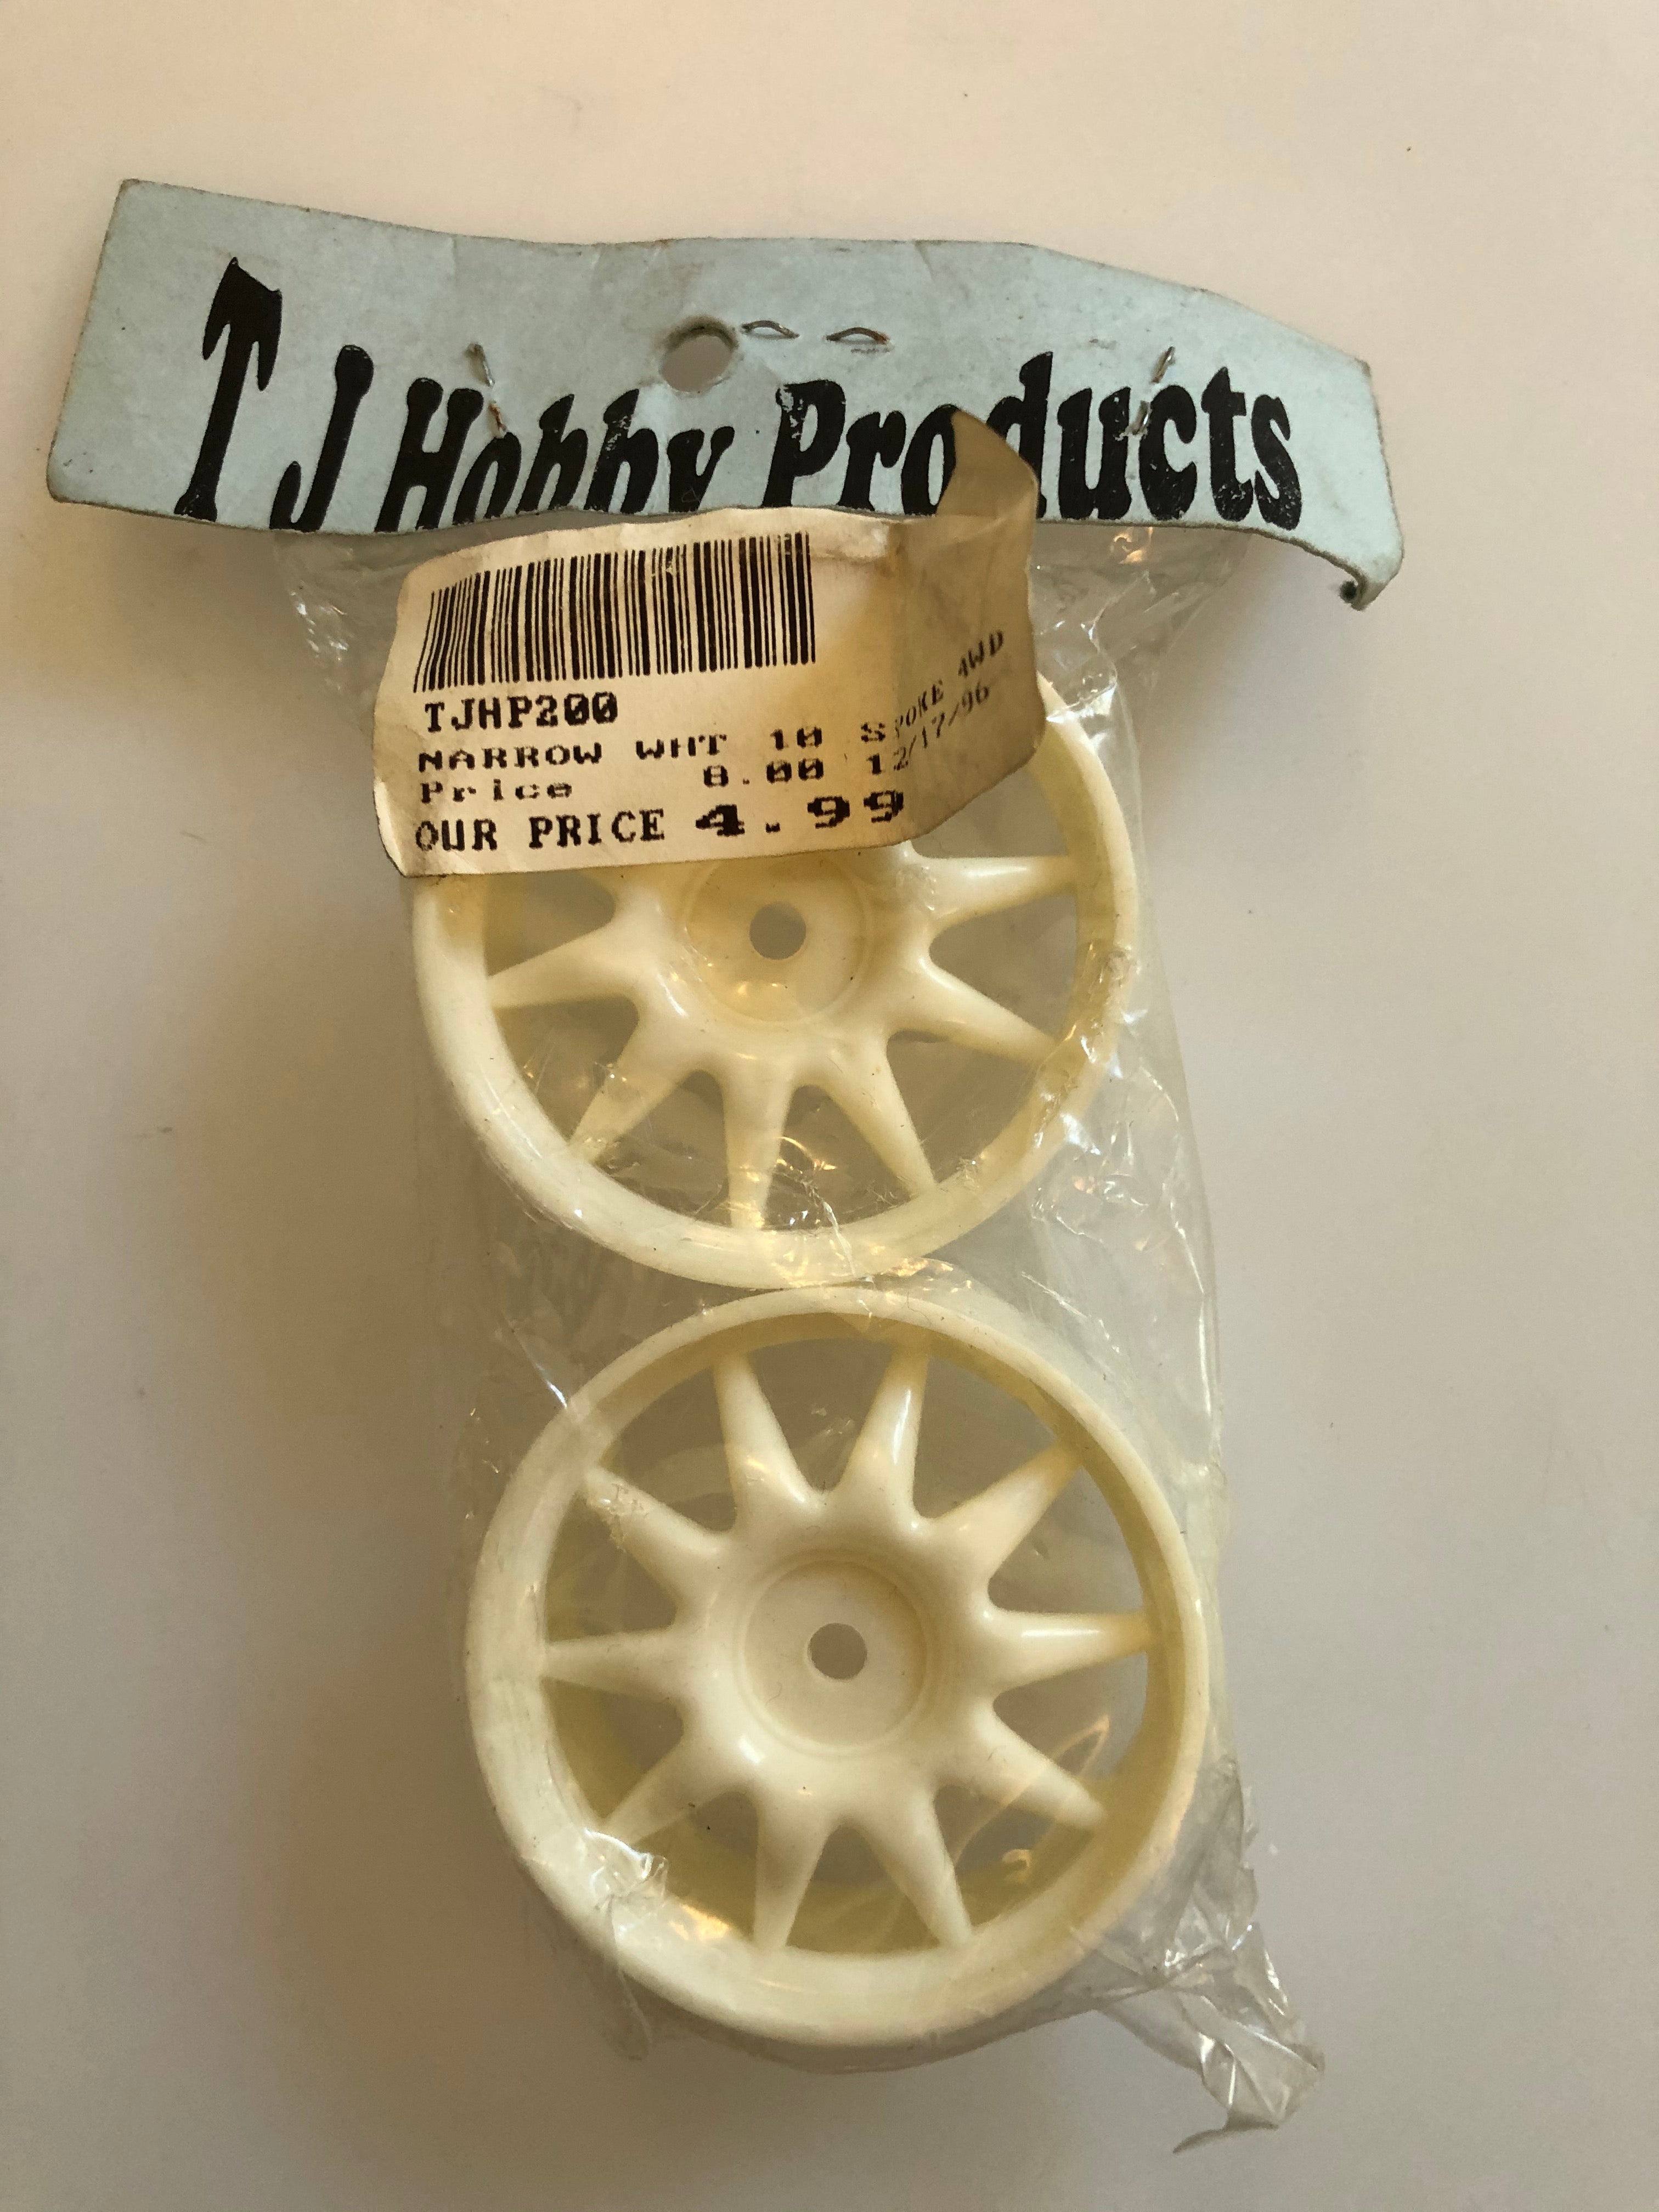 TJ Hobby Products Narrow Wht 10 Spoke Rim for Foam Tires TJHP200